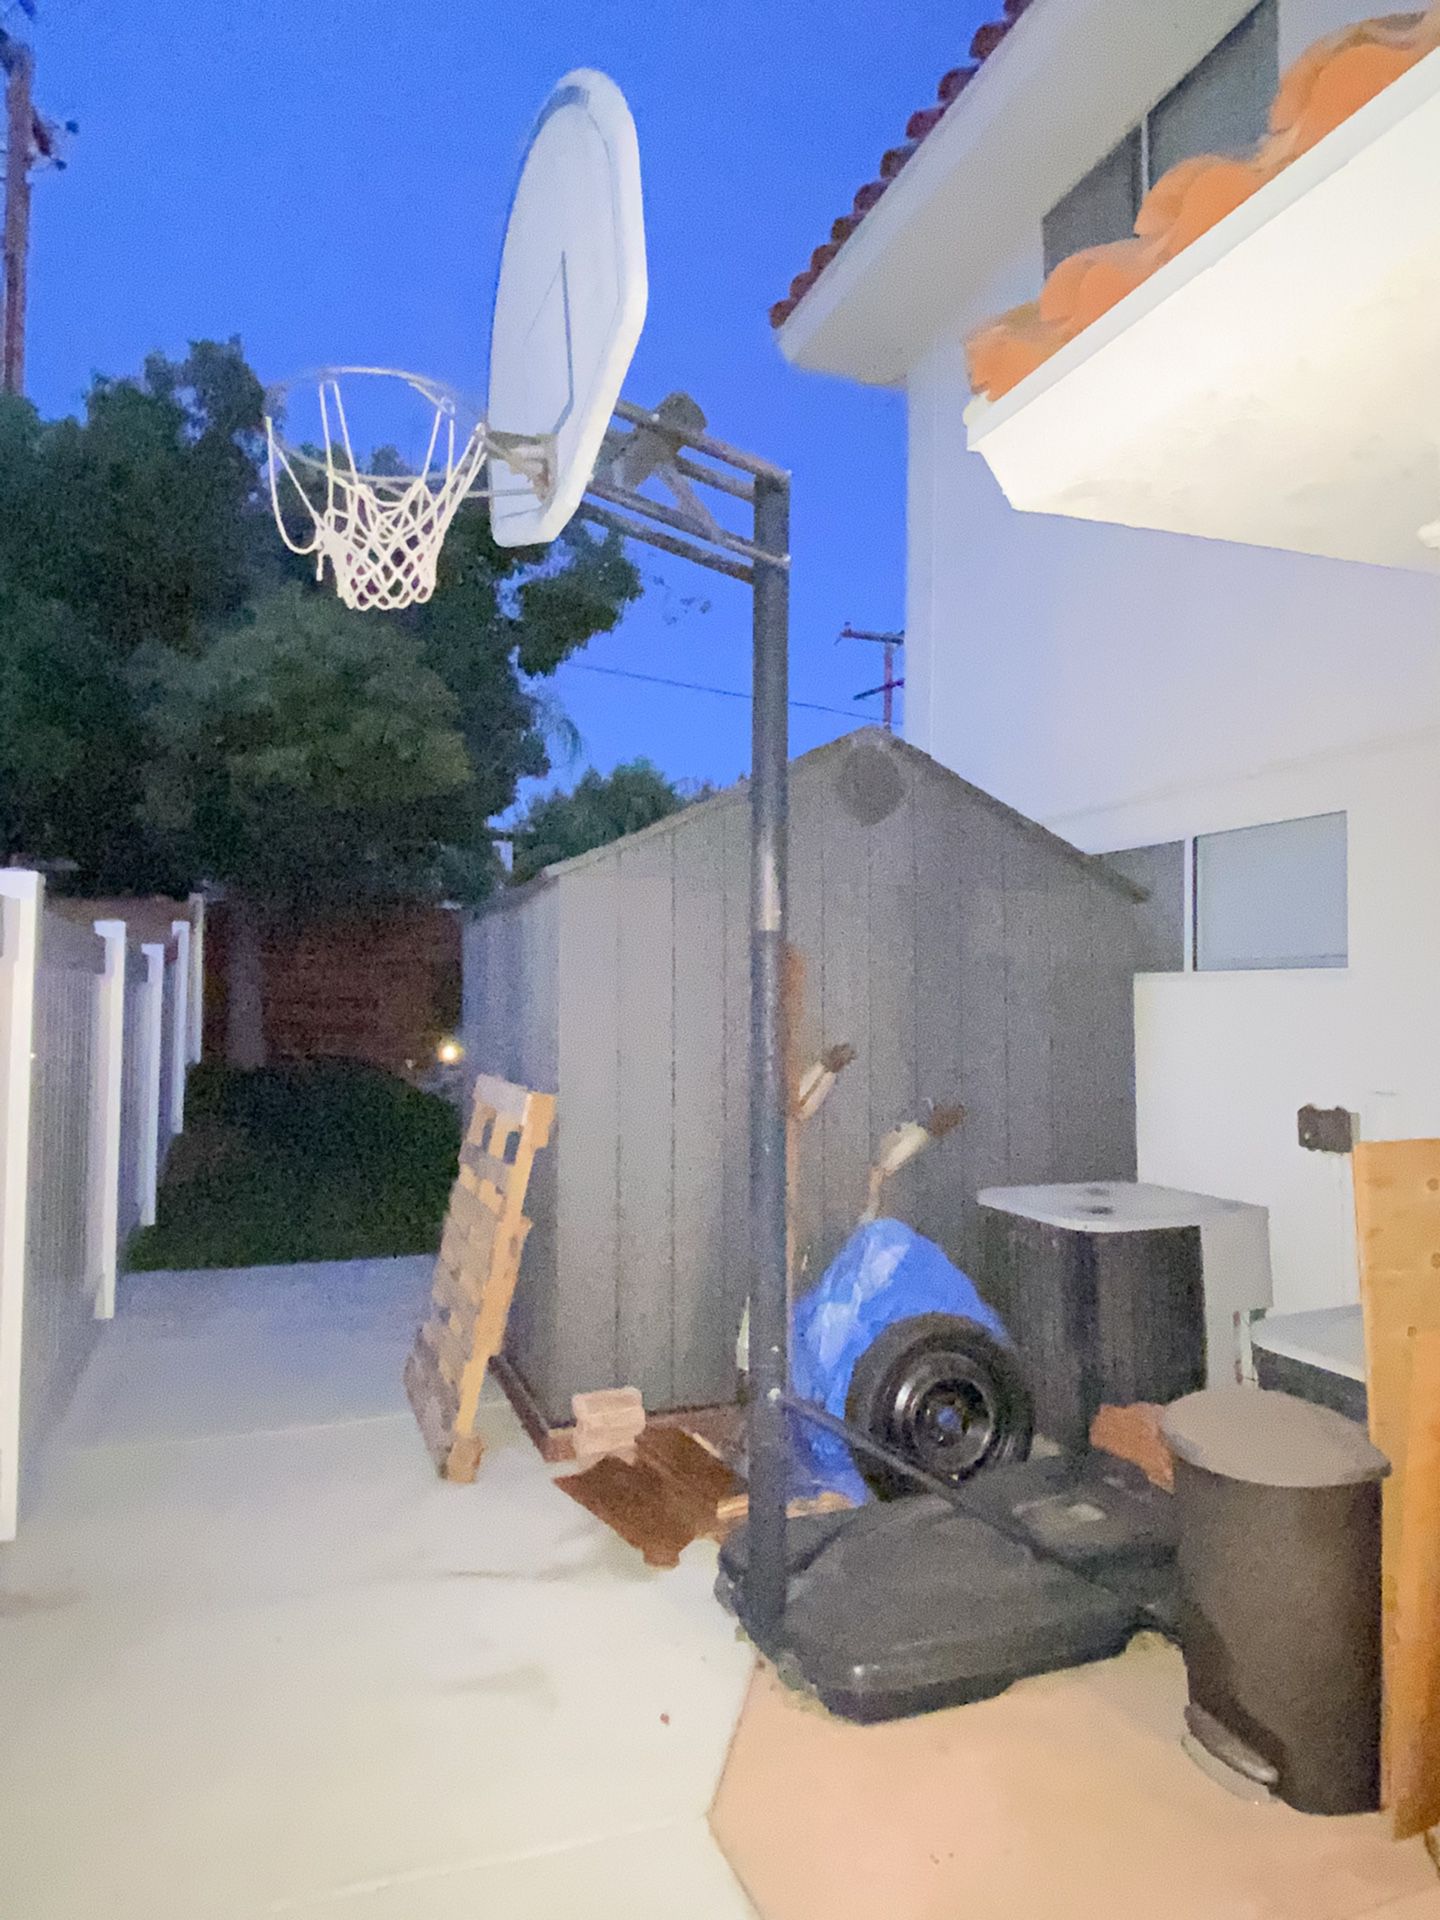 Portable Lifetime Basketball hoop